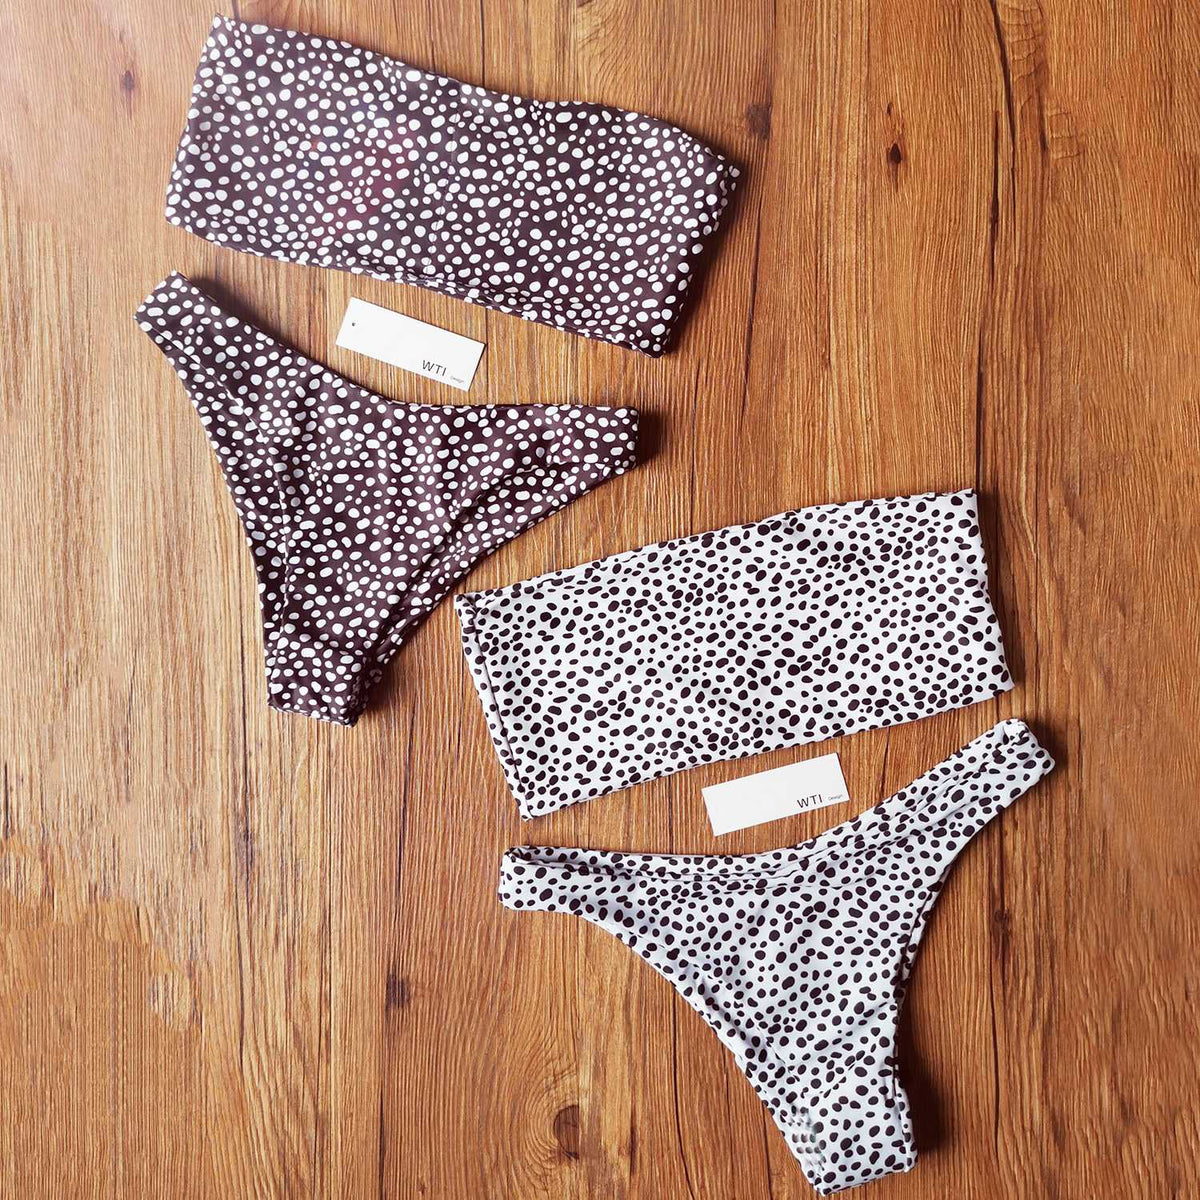 Dot Bikini for Women - Cute Spots High Cut Bandeau Bikini Set for Sale ...